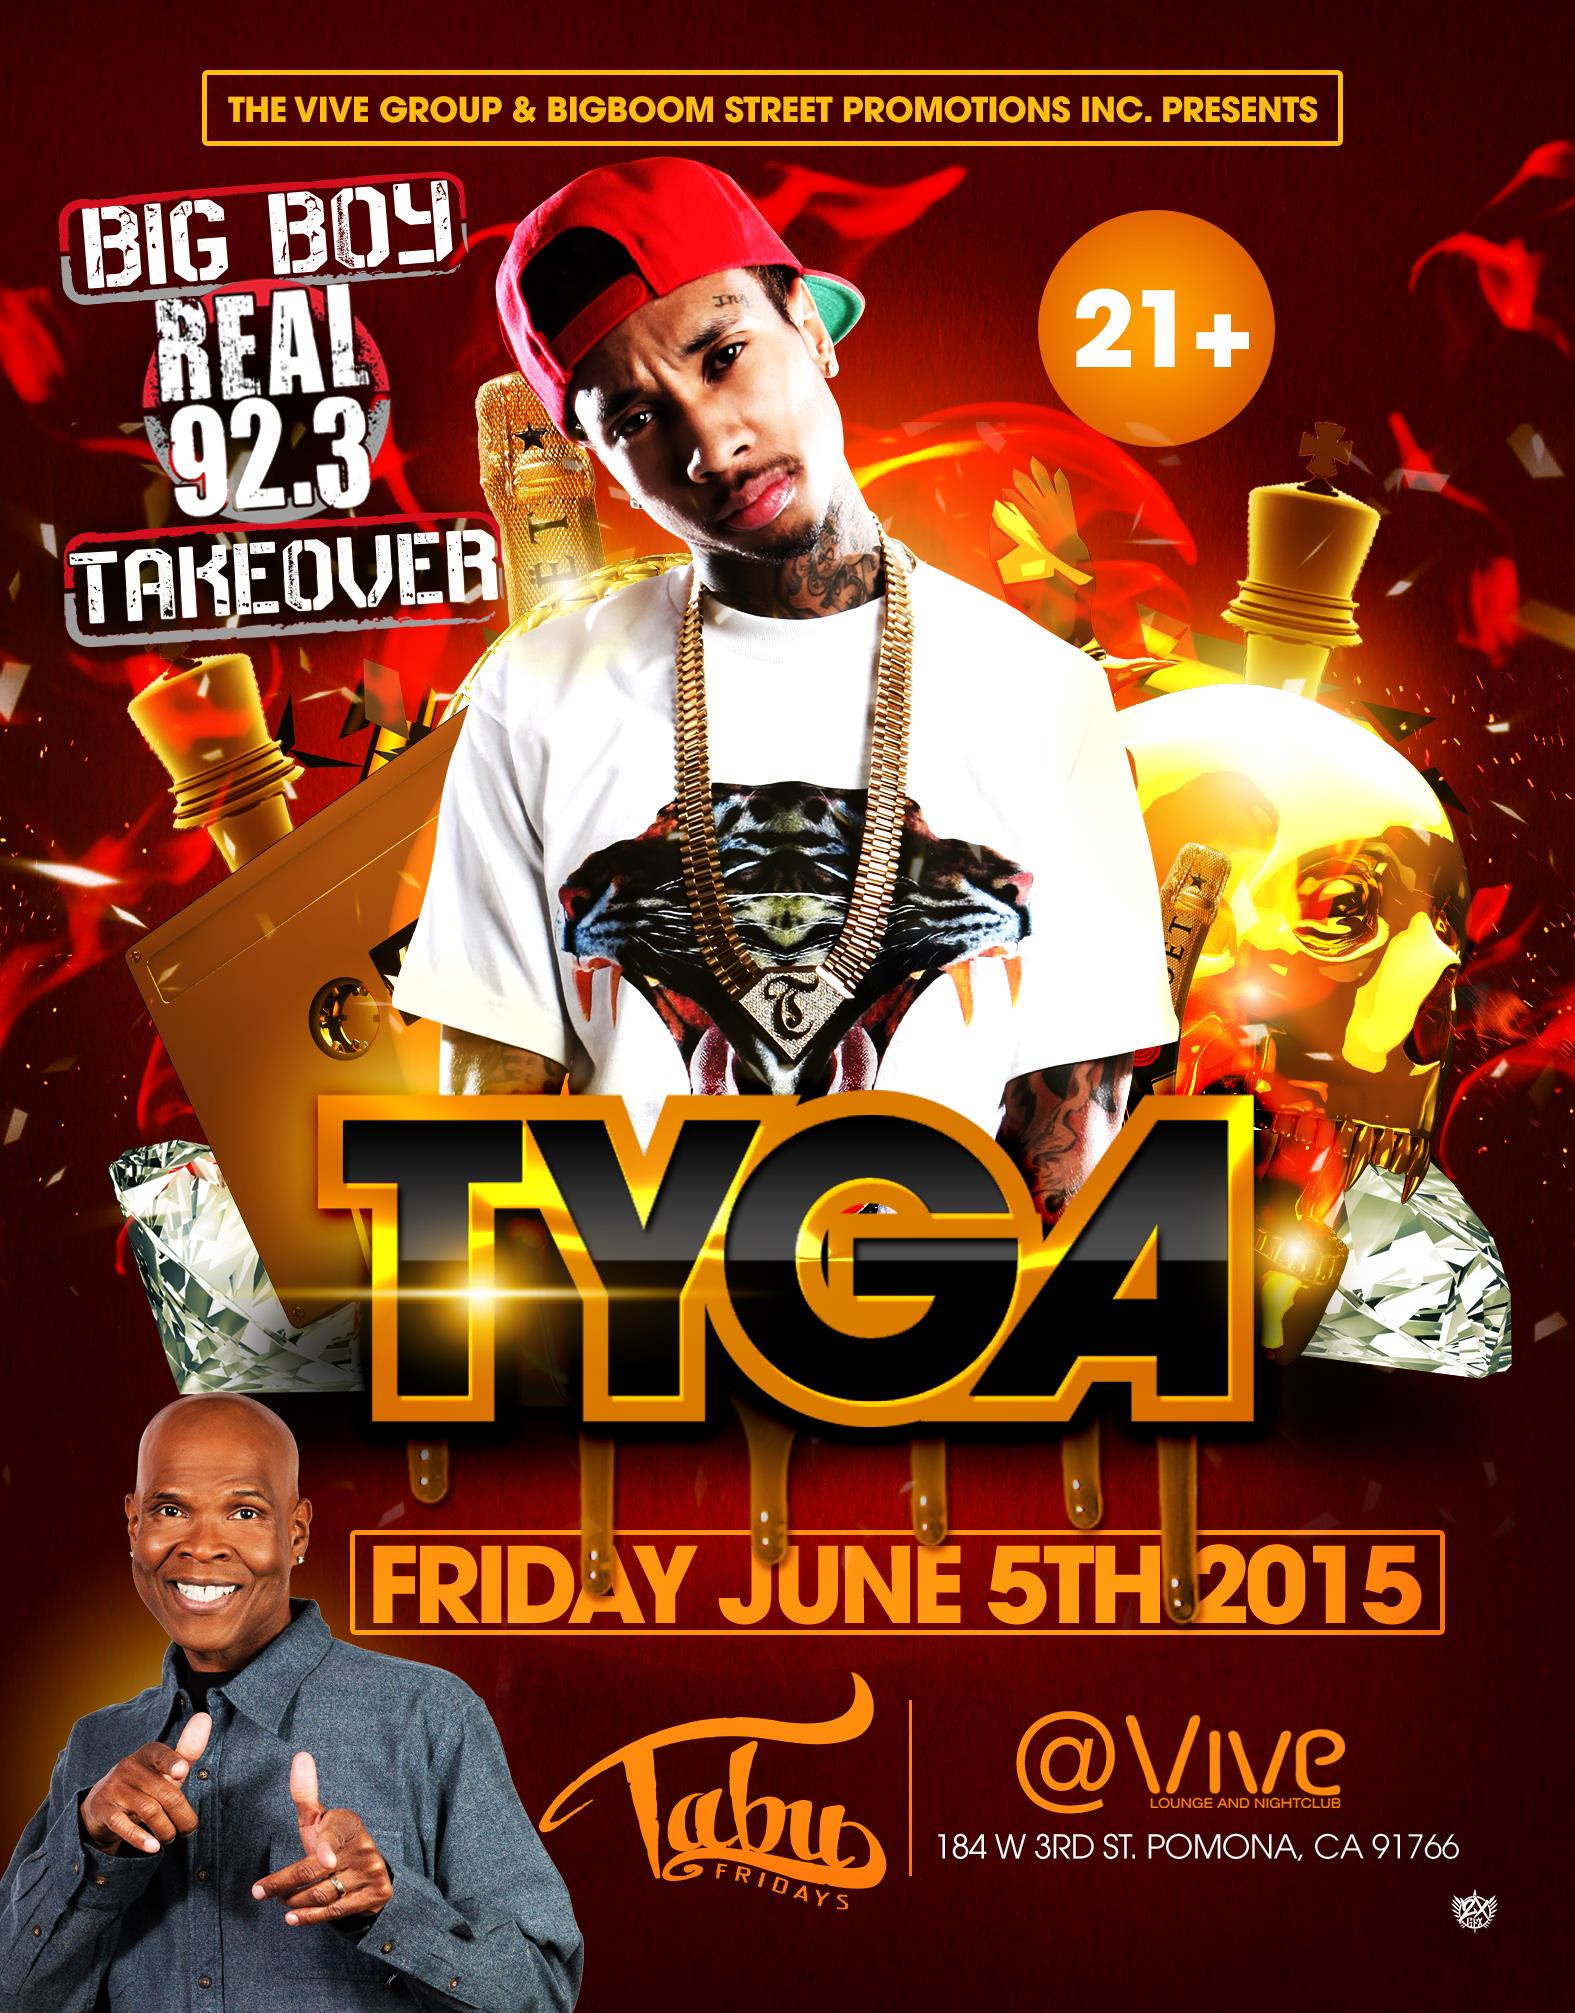 TYGA @ TABU FRIDAYS INSIDE VIVE LOUNGE Tickets 06/05/15